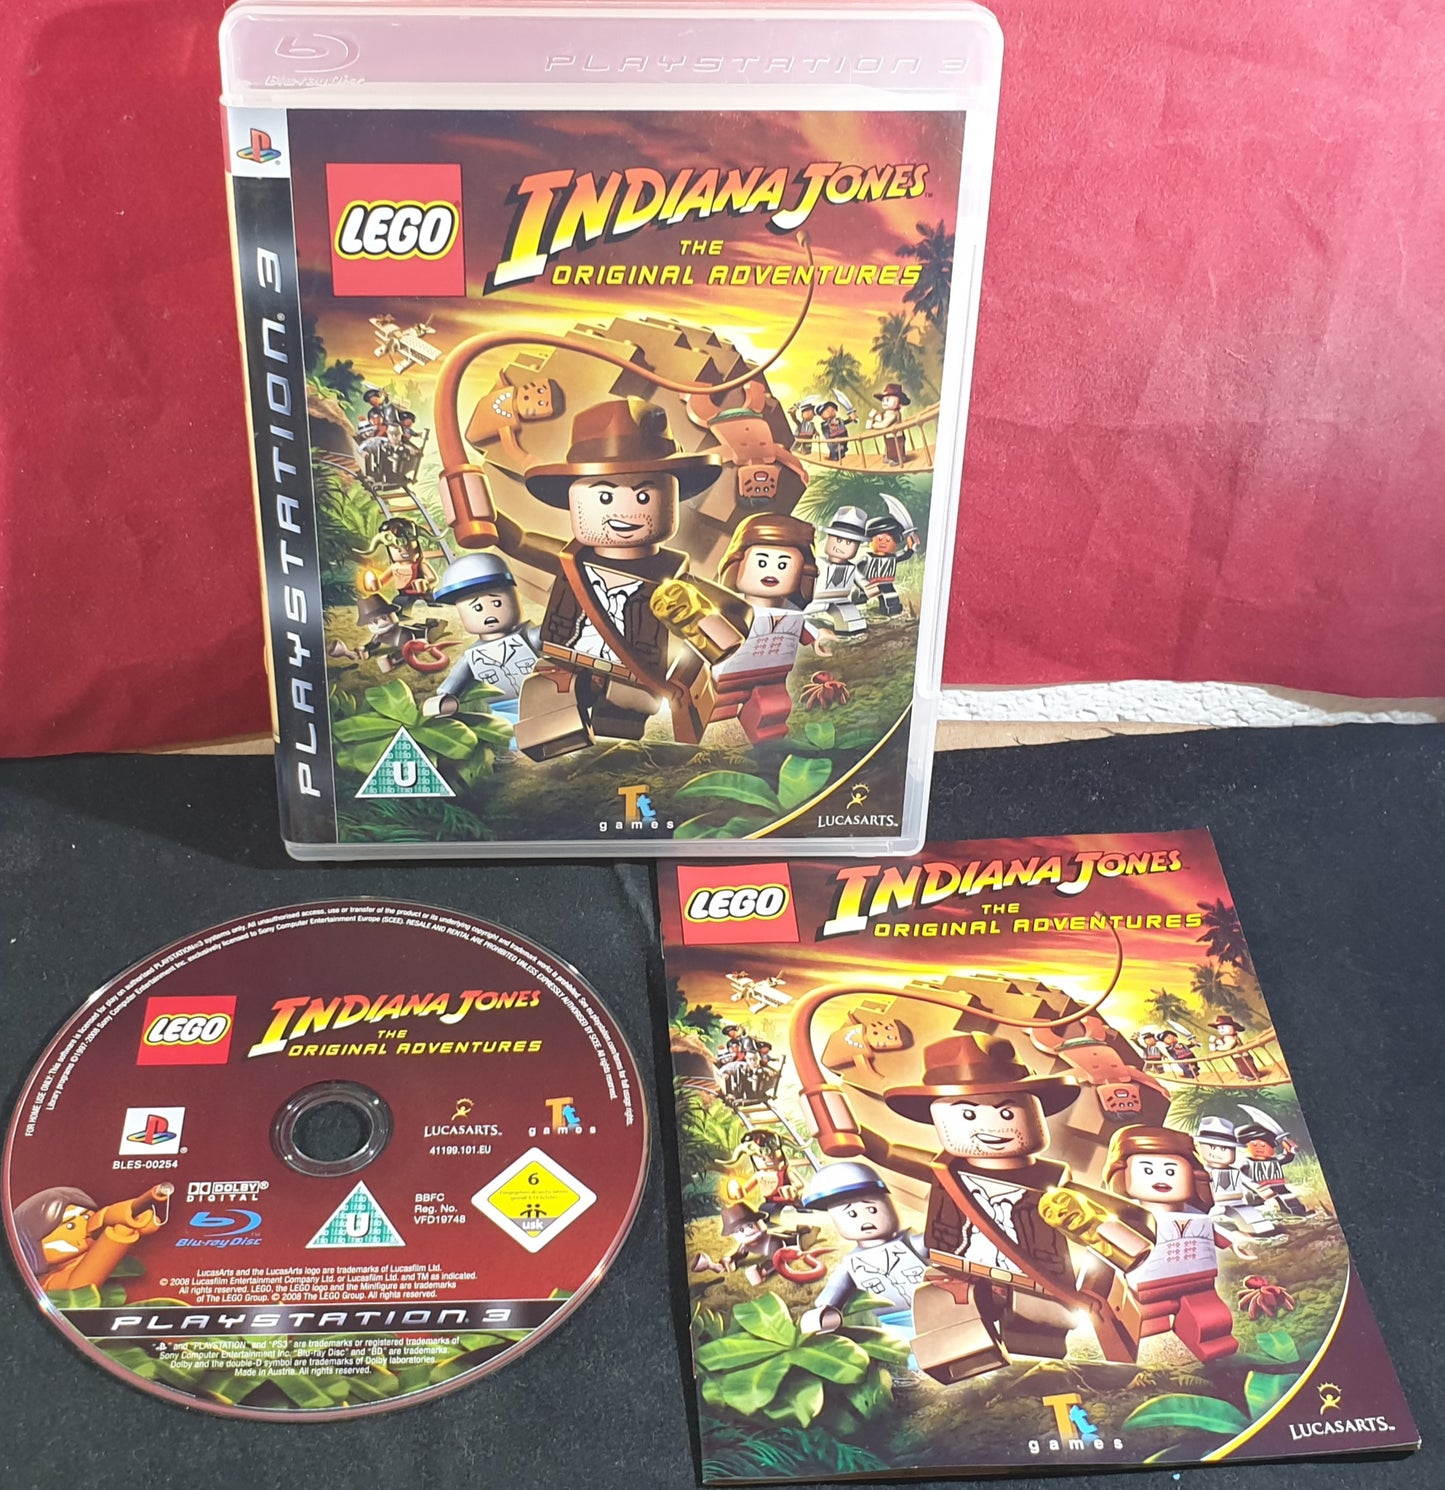 Lego Indiana Jones the Original Adventures Sony Playstation 3 (PS3) Game